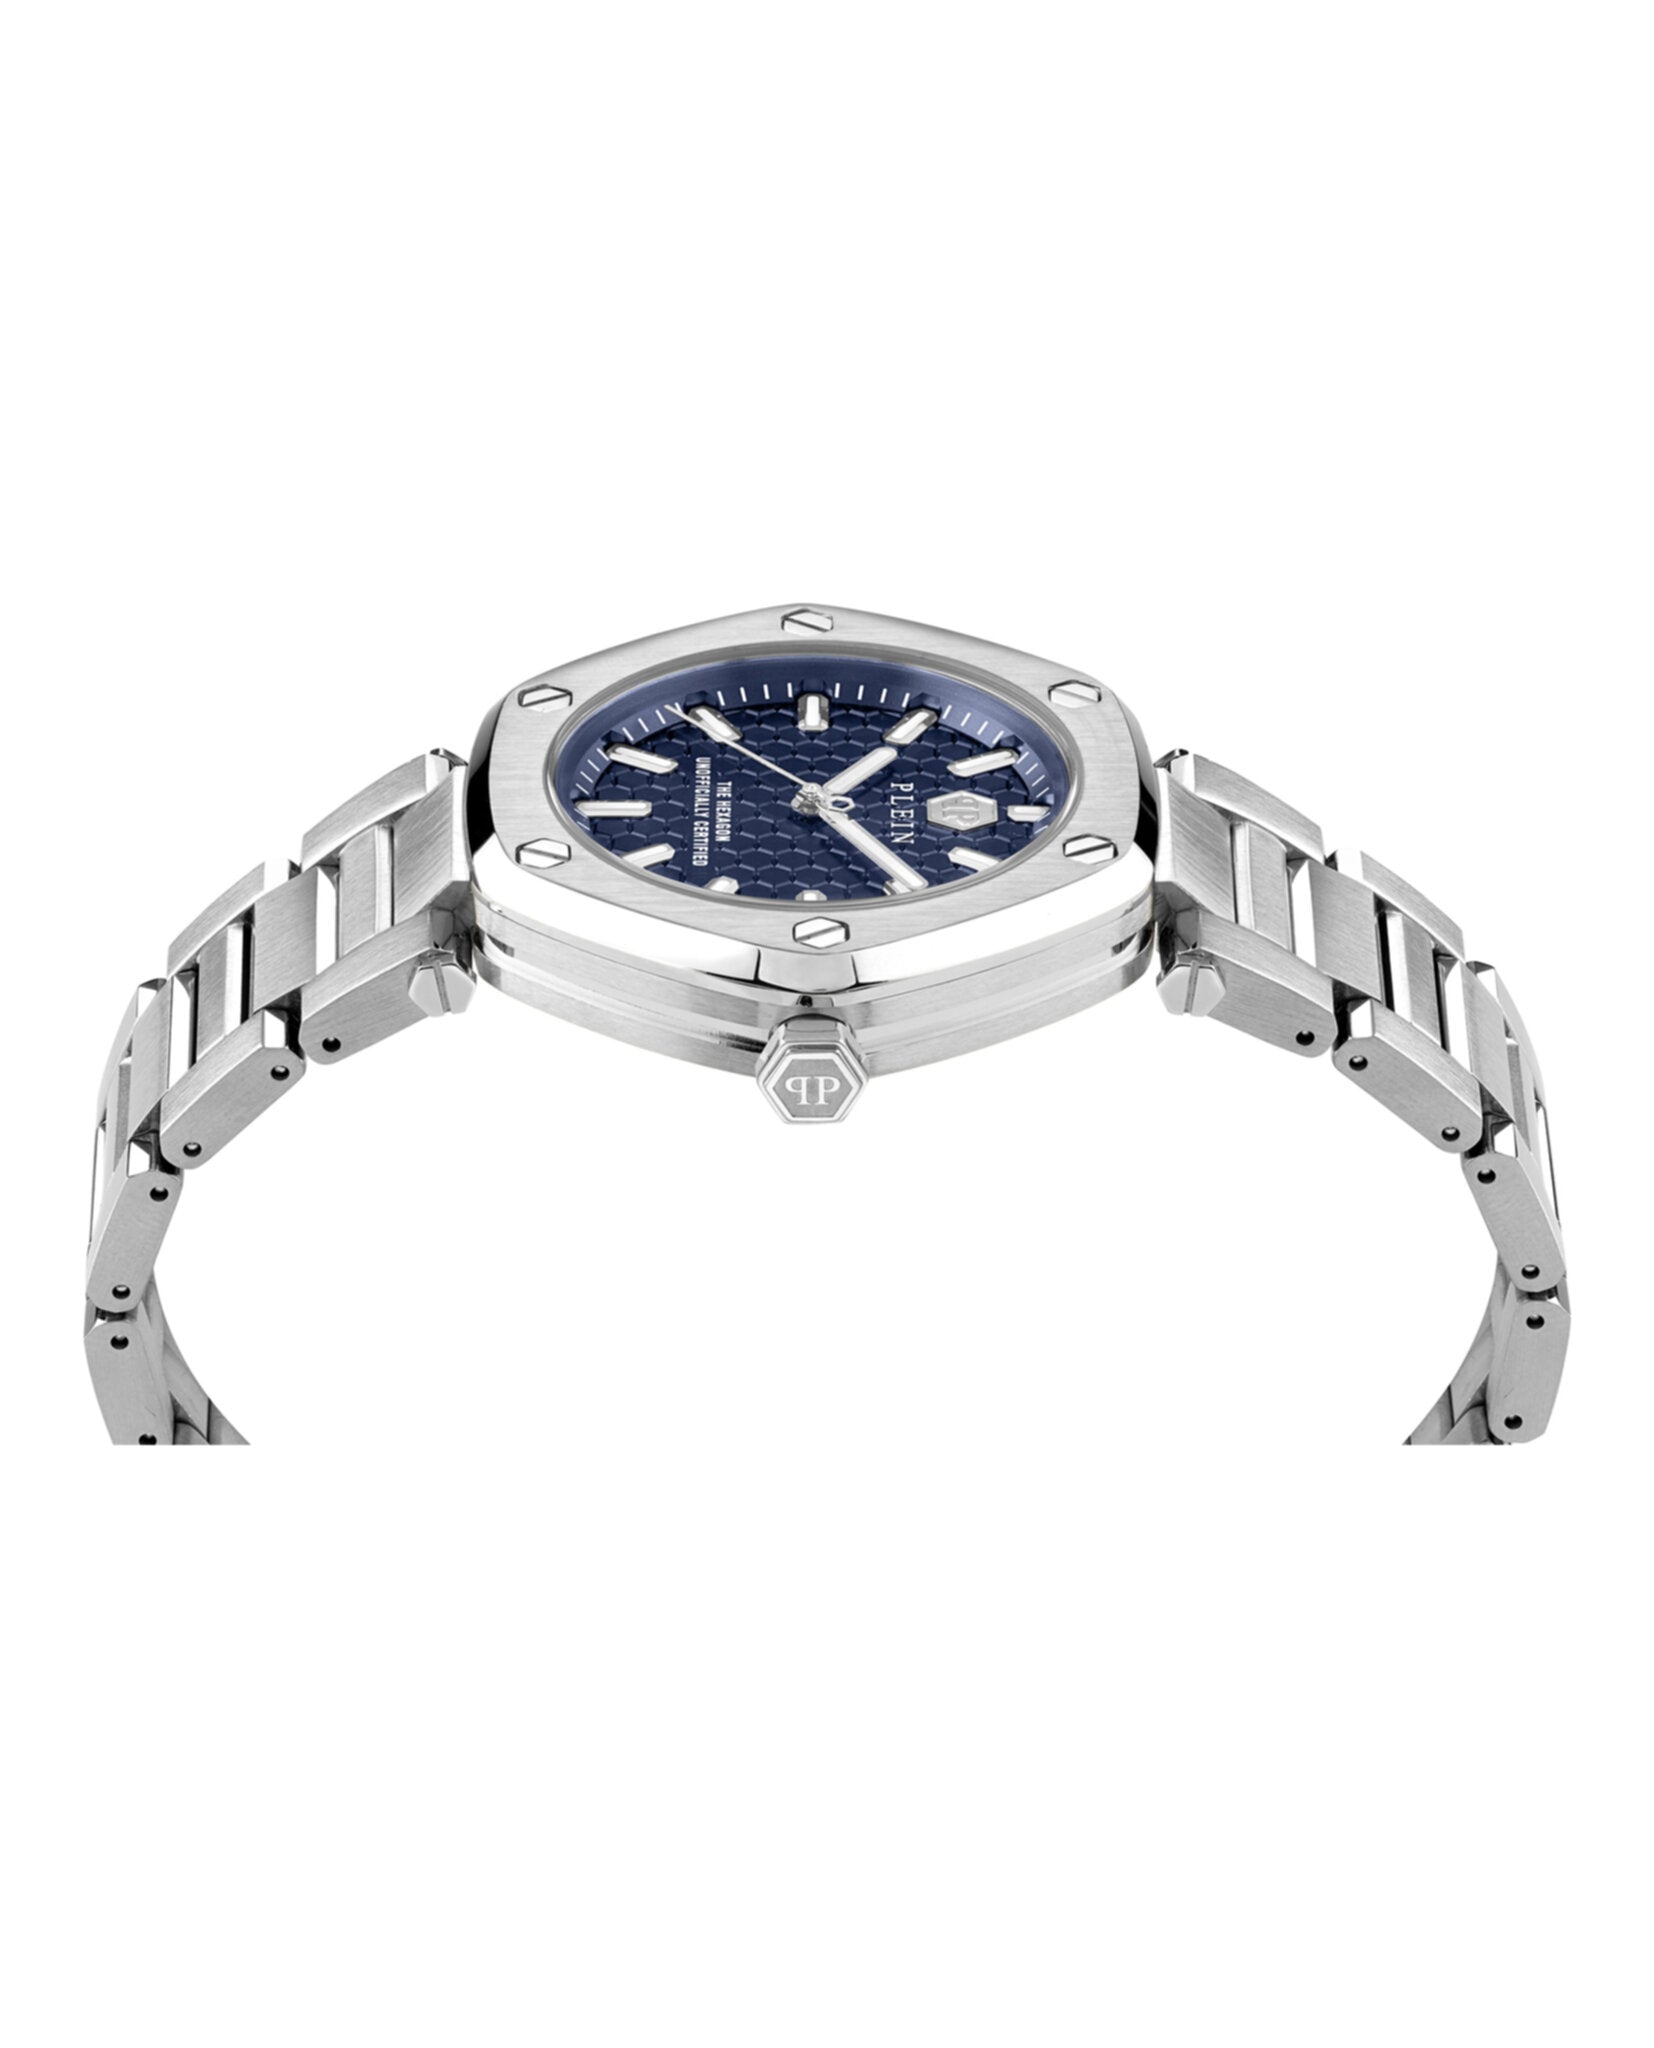 The Hexagon Bracelet Watch